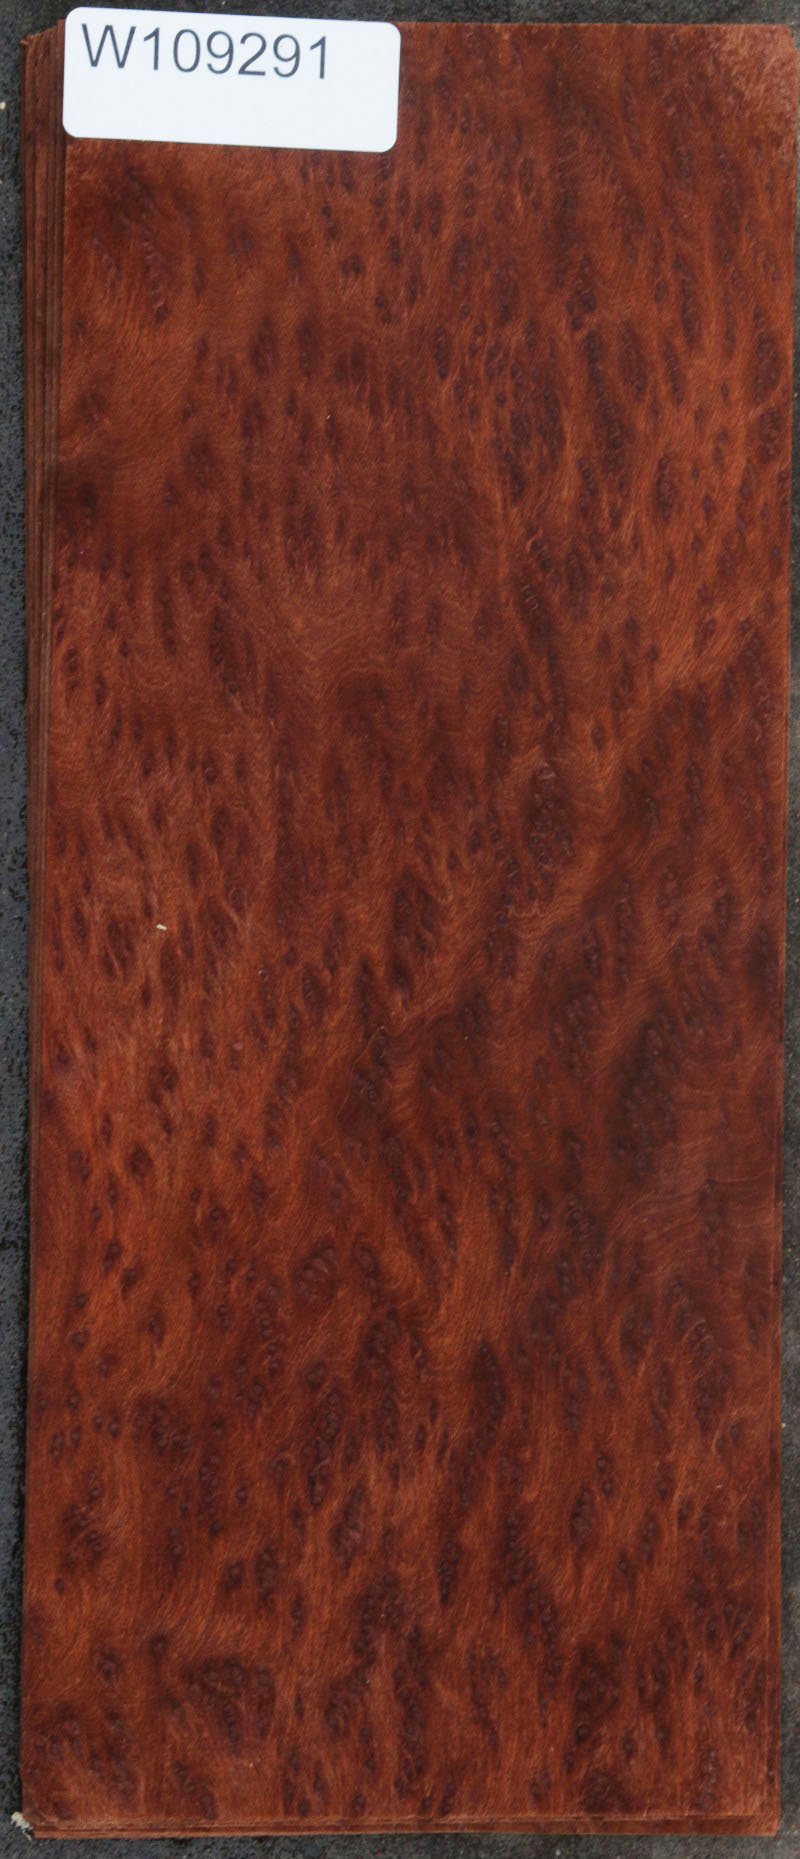 Exhibition Grade Redwood Lace Burl Veneer Flitch - 15 Sheets